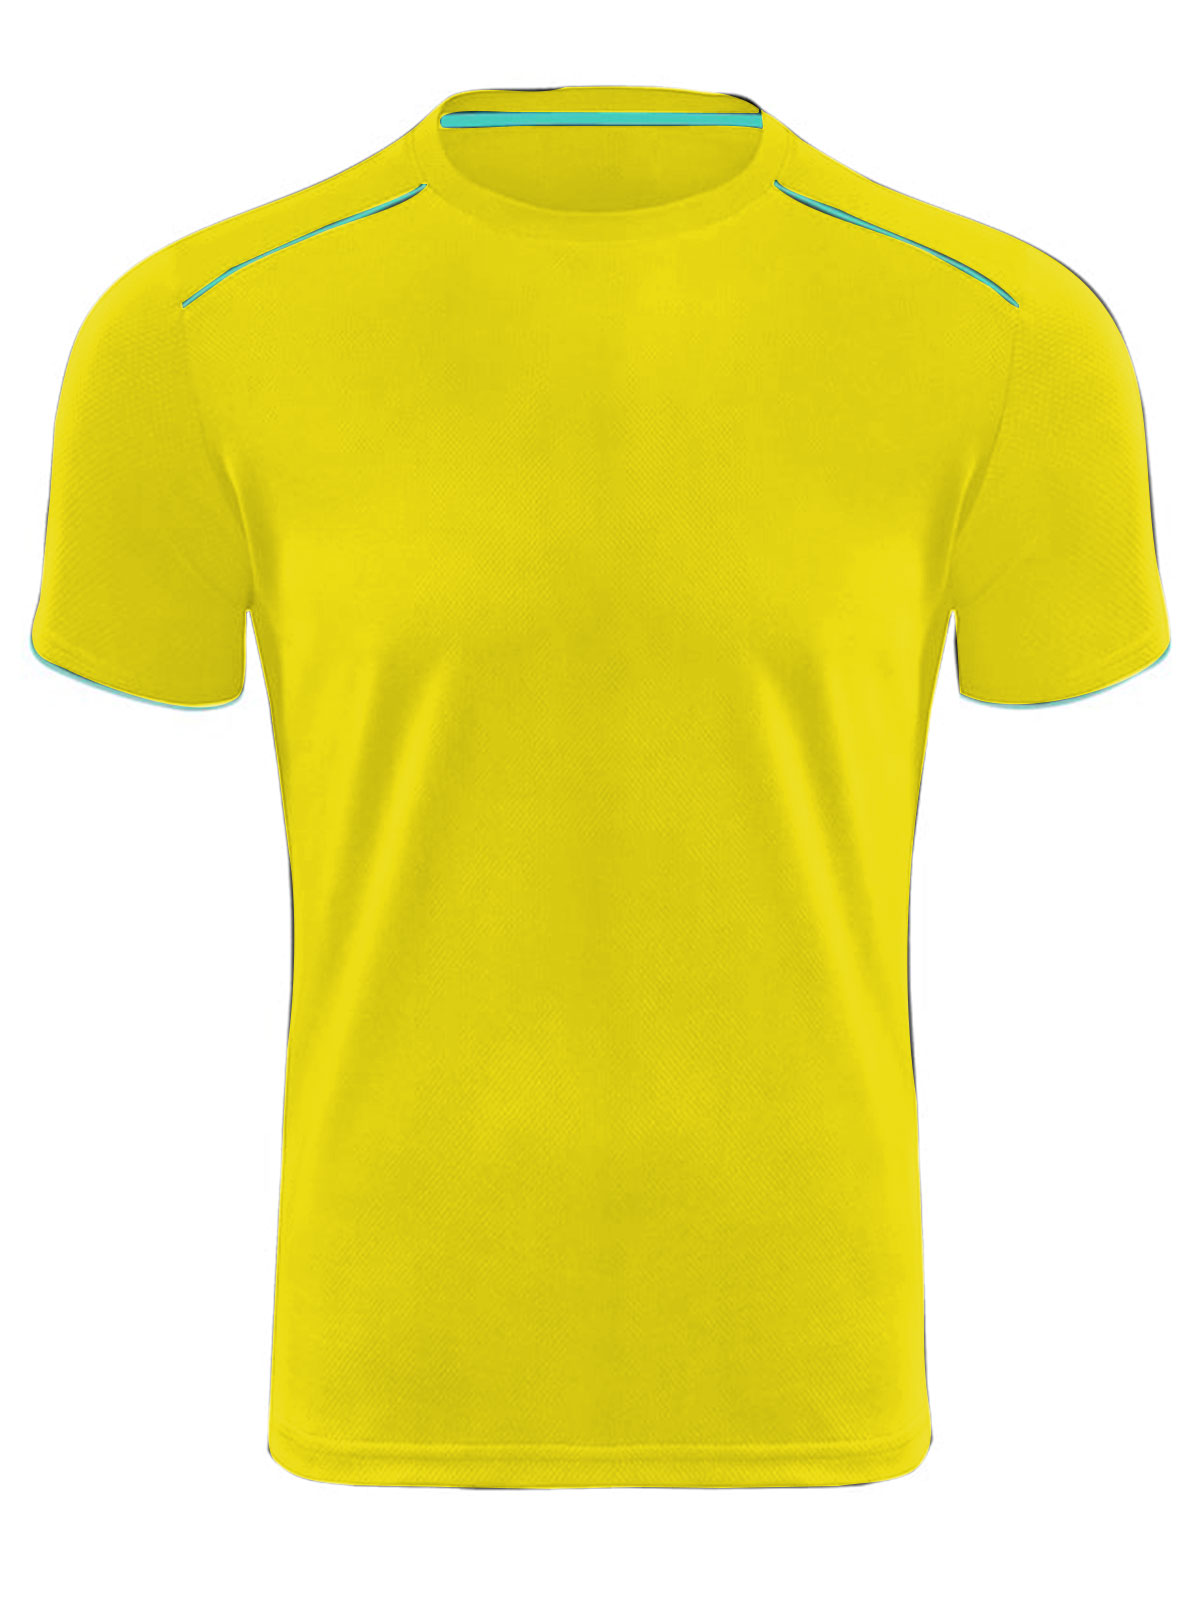 bicolor-performance-t-shirt-yellow-fluo-light-jade.webp